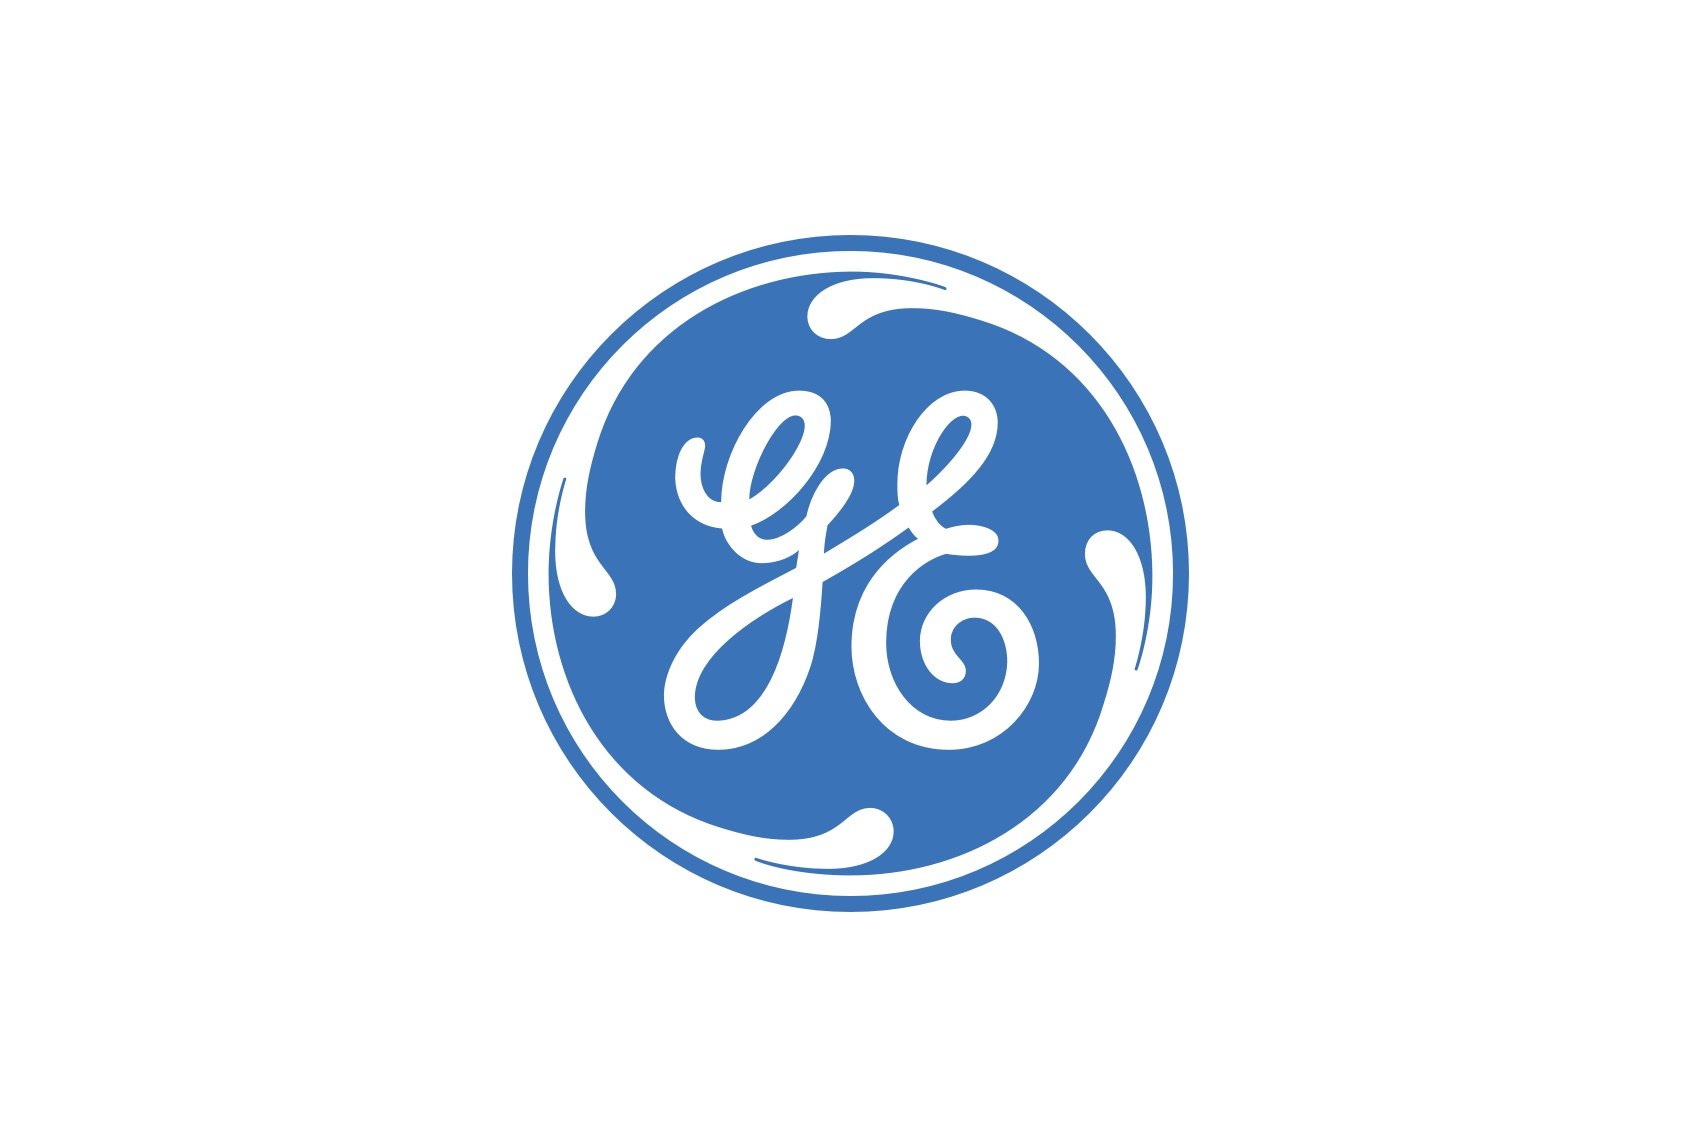 General Electric monogram logo